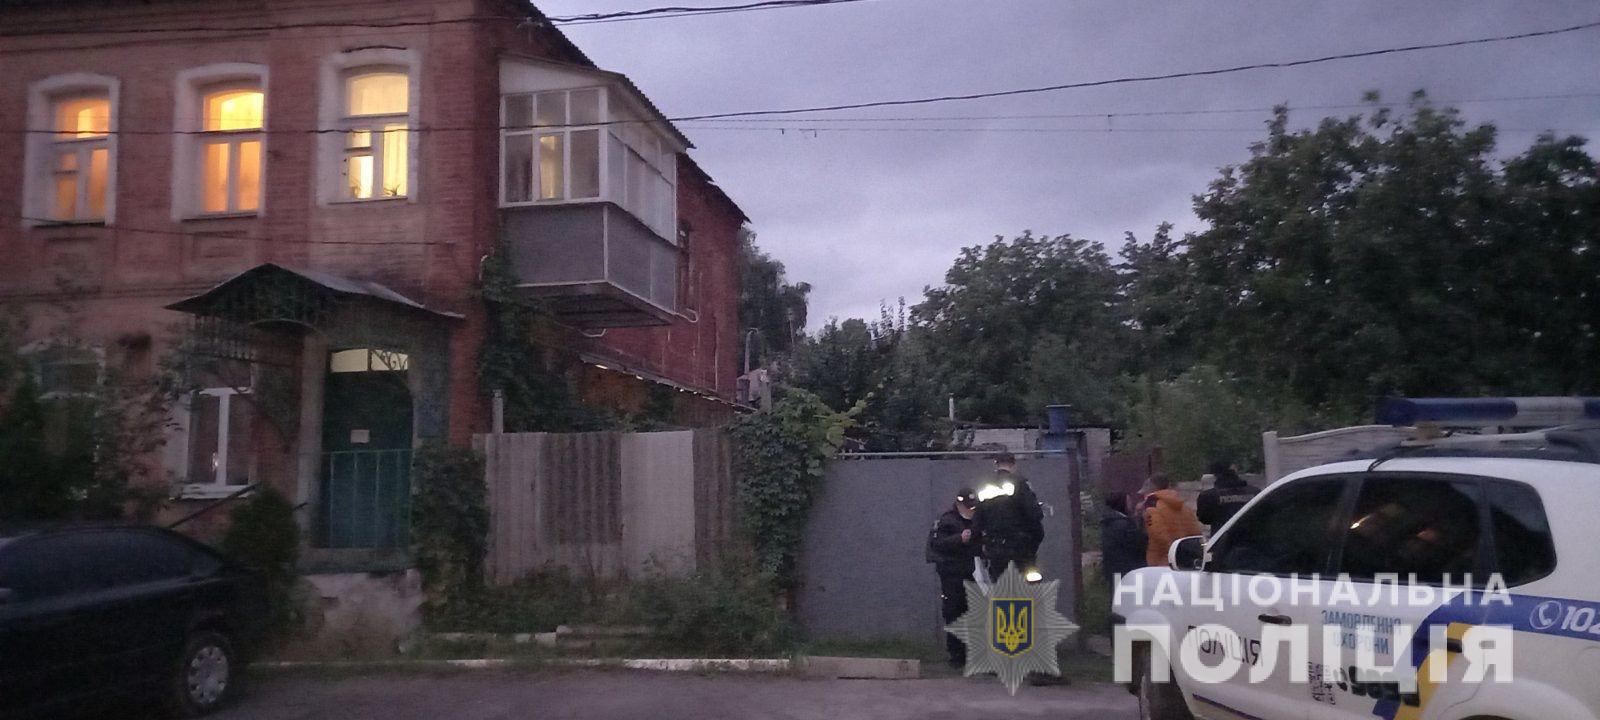 В Харькове напали на полицейского